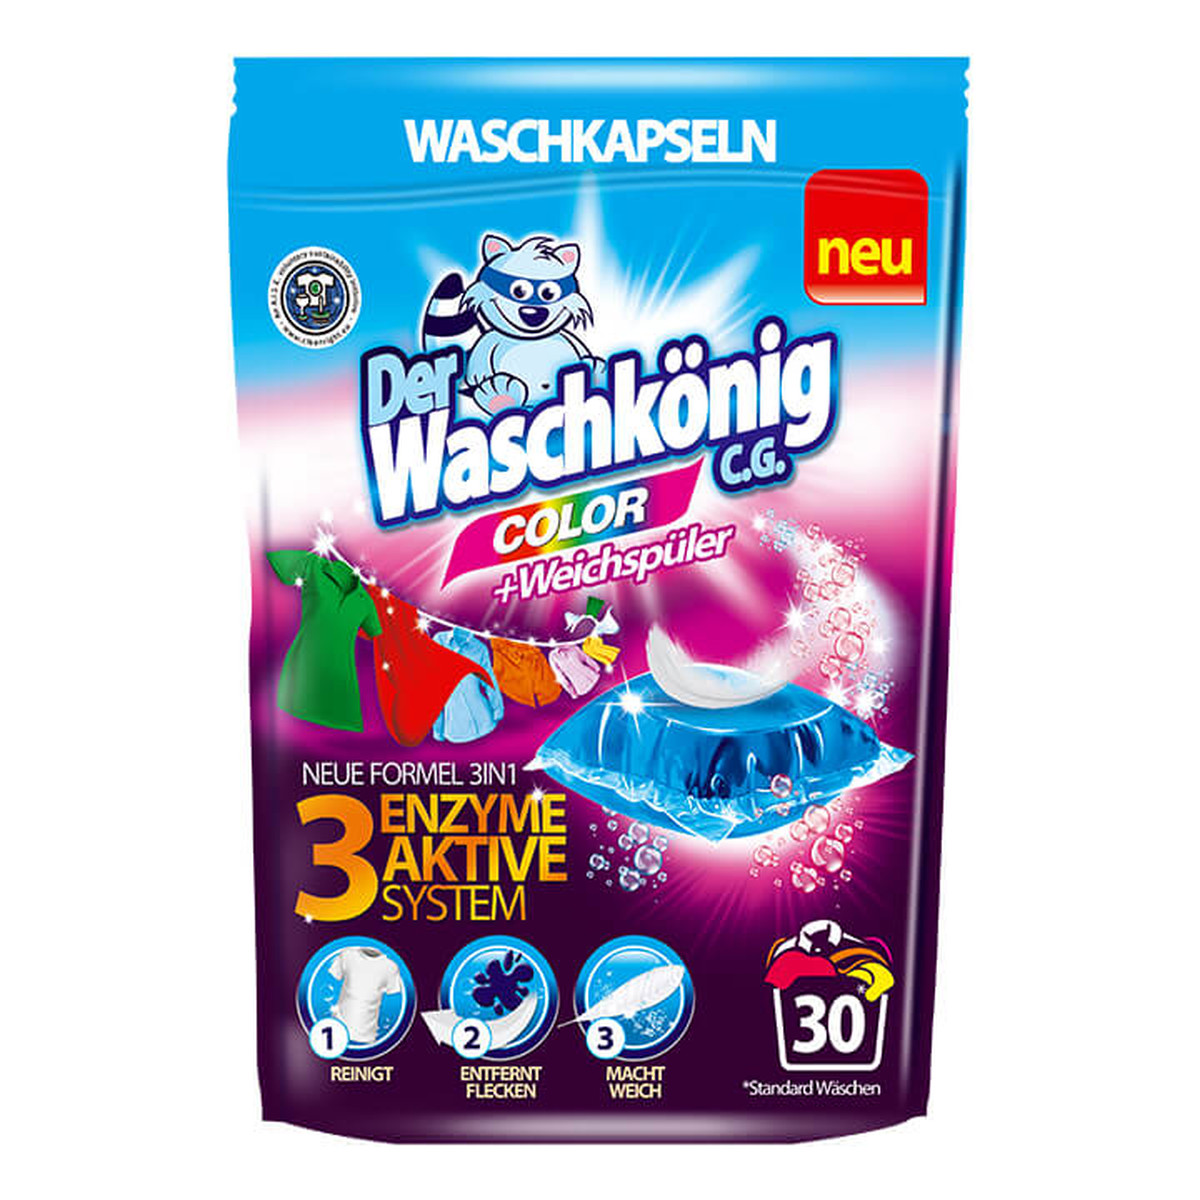 Der Waschkönig Mega Caps 3w1 Kapsułki do prania 30 szt. Color